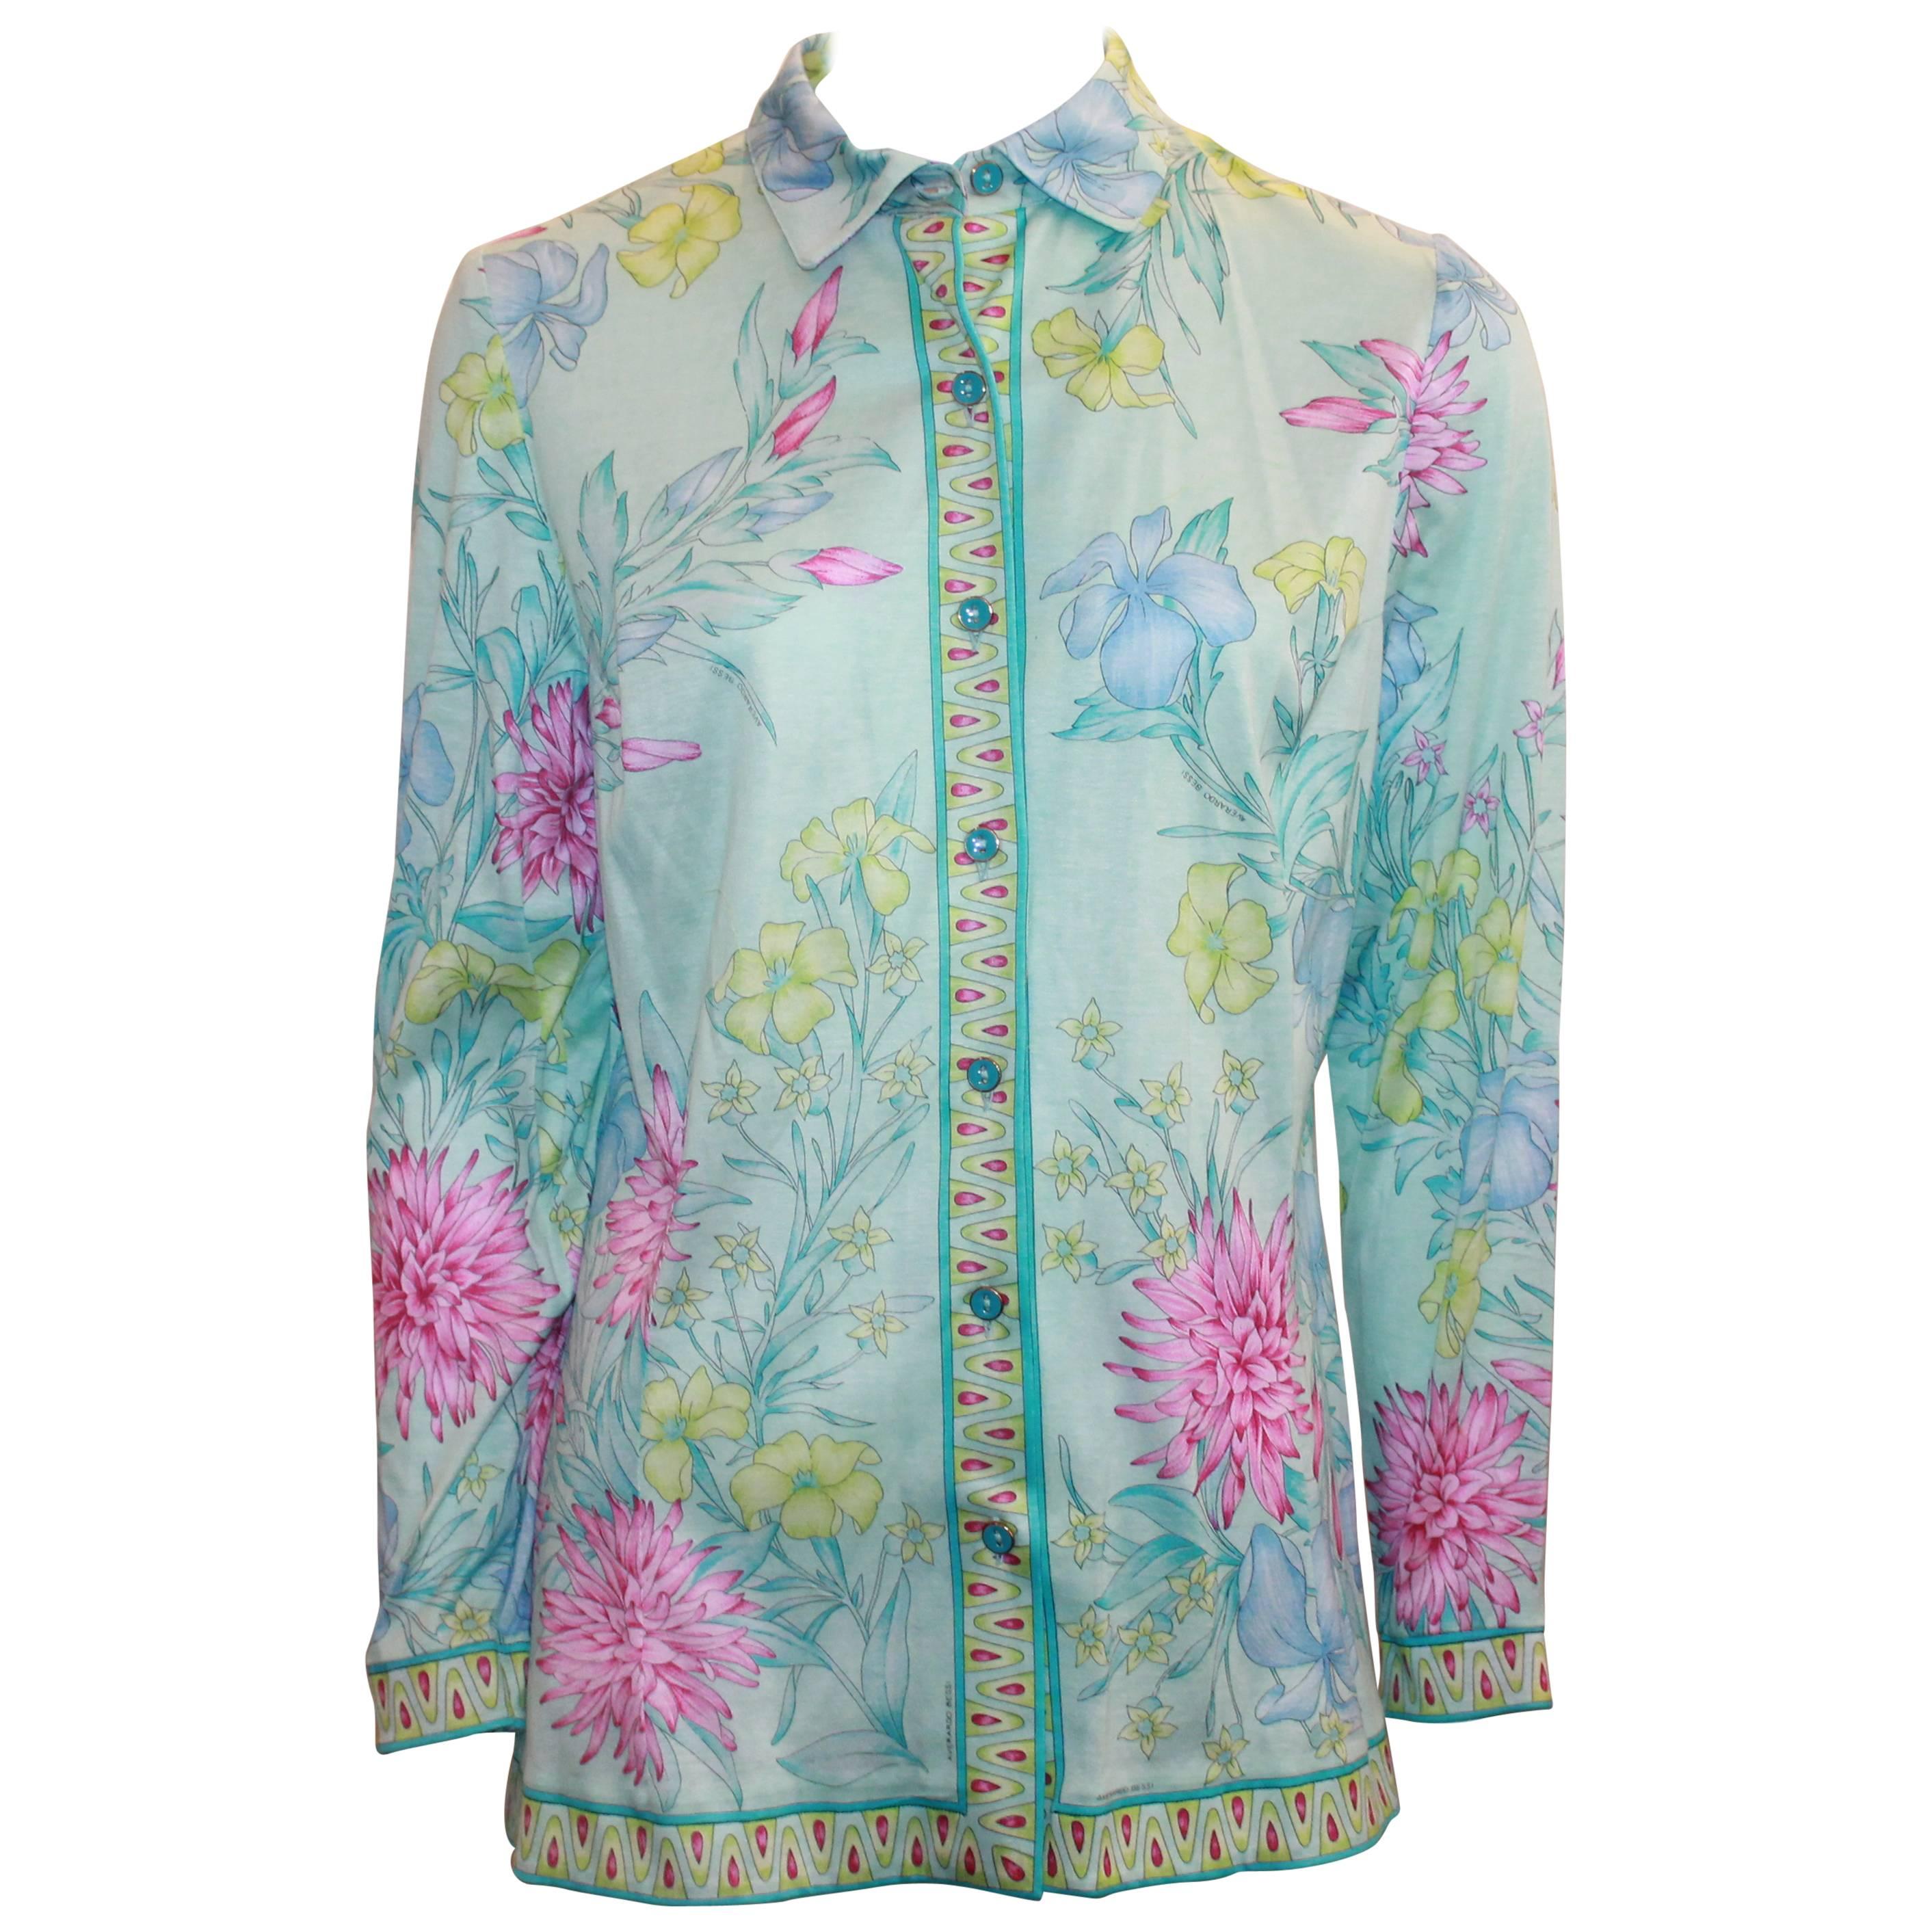 Averardo Bessi Aqua & Pastels Silk Cotton Shirt - 38